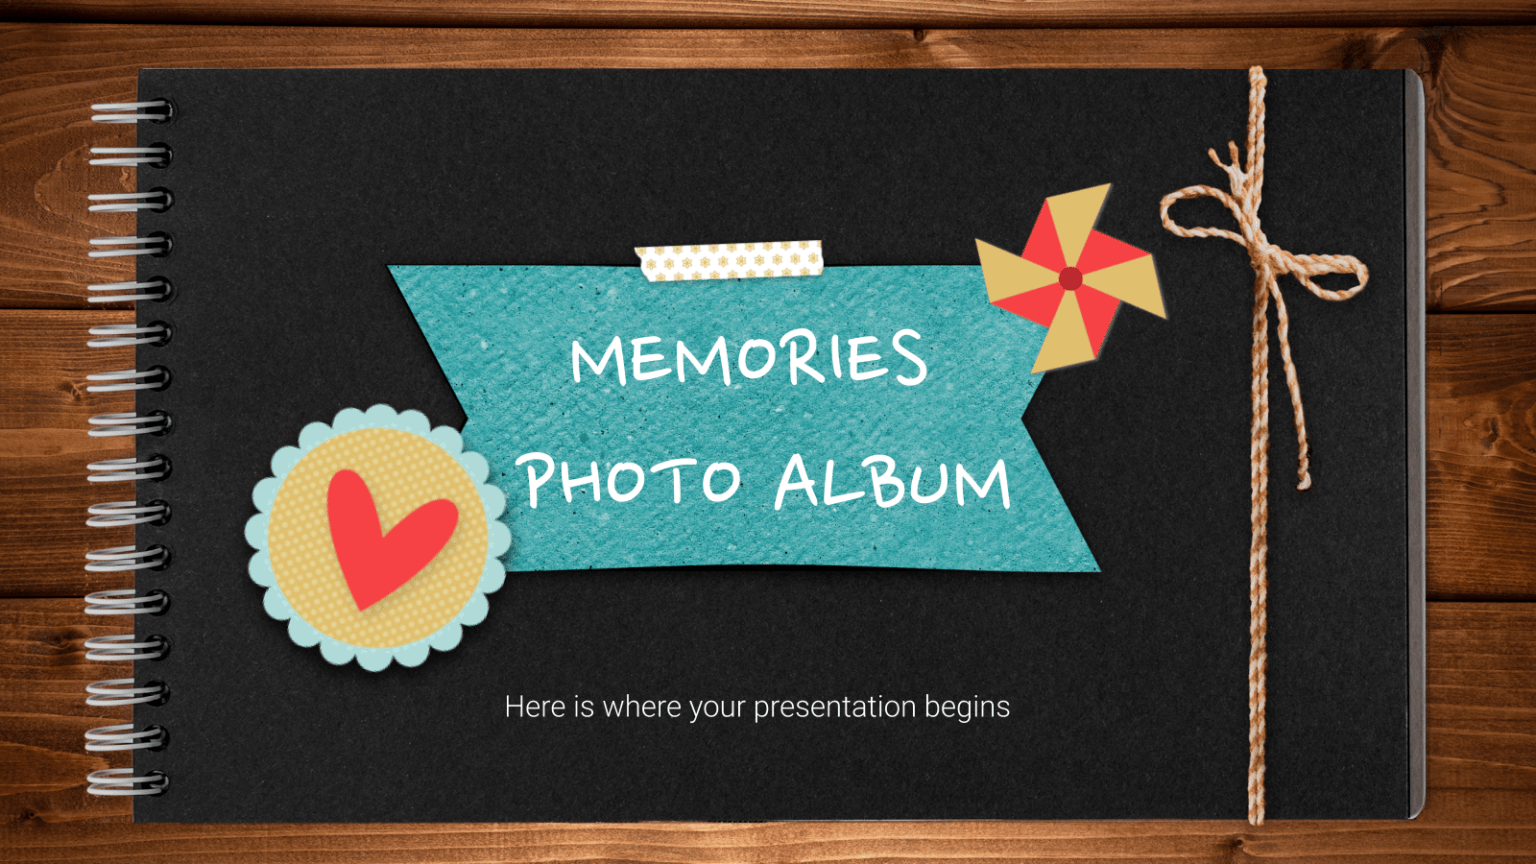 Memories Photo Album Google Slides Theme And Powerpoint Template With Regard To Powerpoint Photo